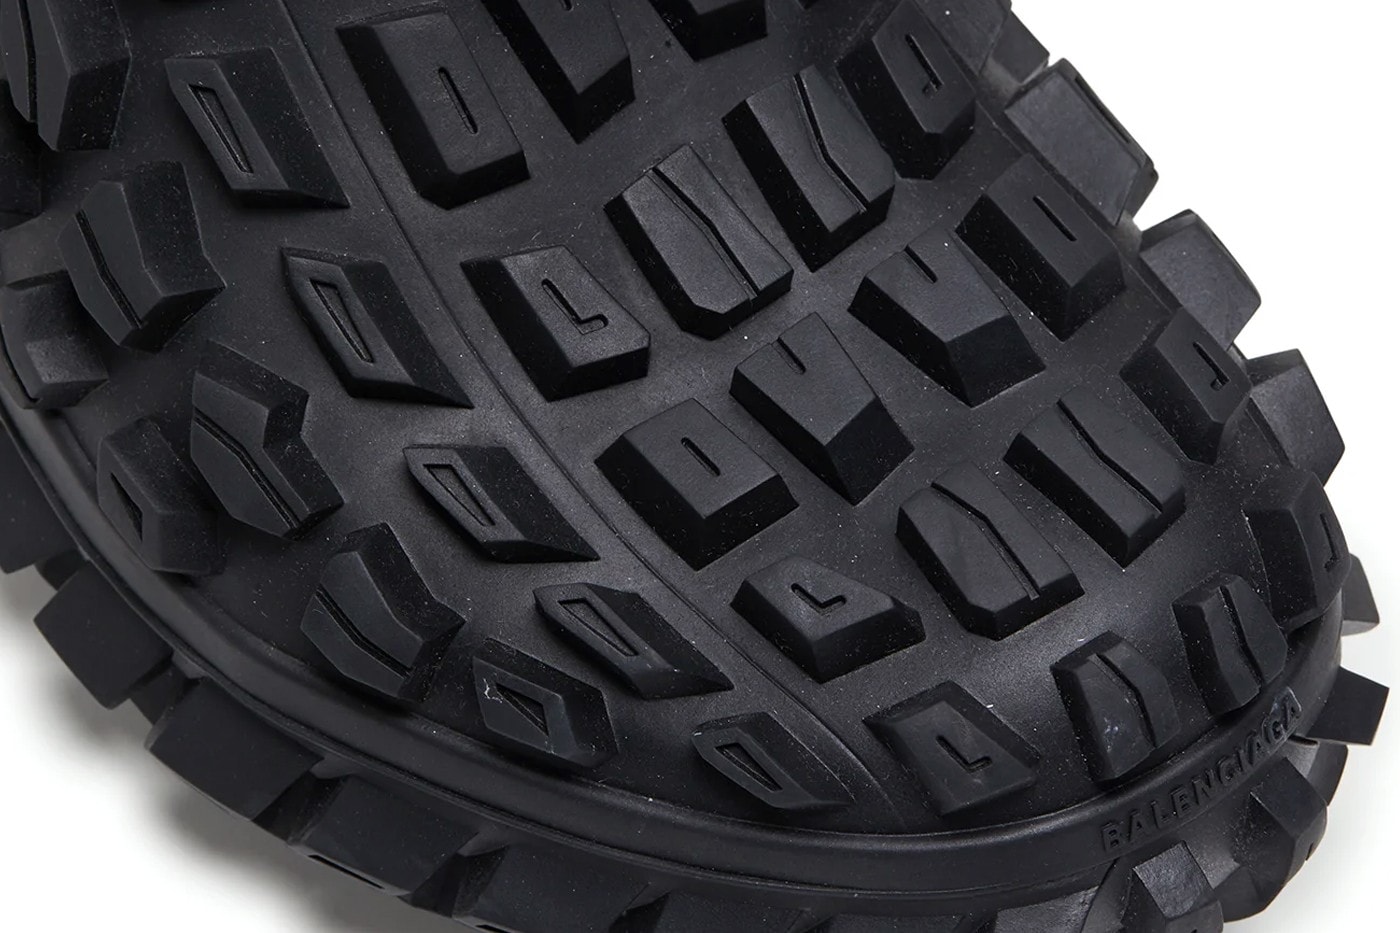 Balenciaga 全新鞋款「Defender Extreme Tire Tread Clogs」正式登場